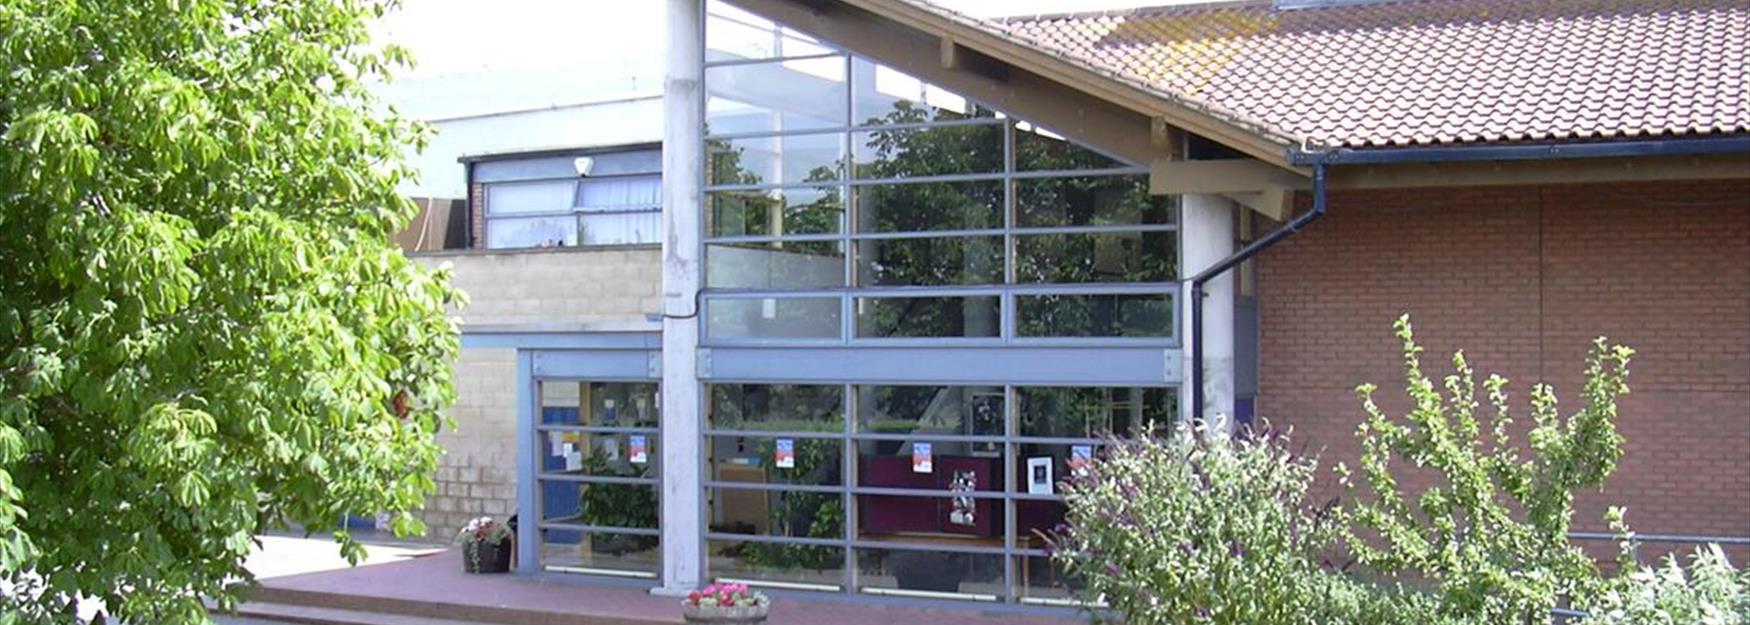 Exterior of the Bacon Theatre at Dean Close School in Cheltenham